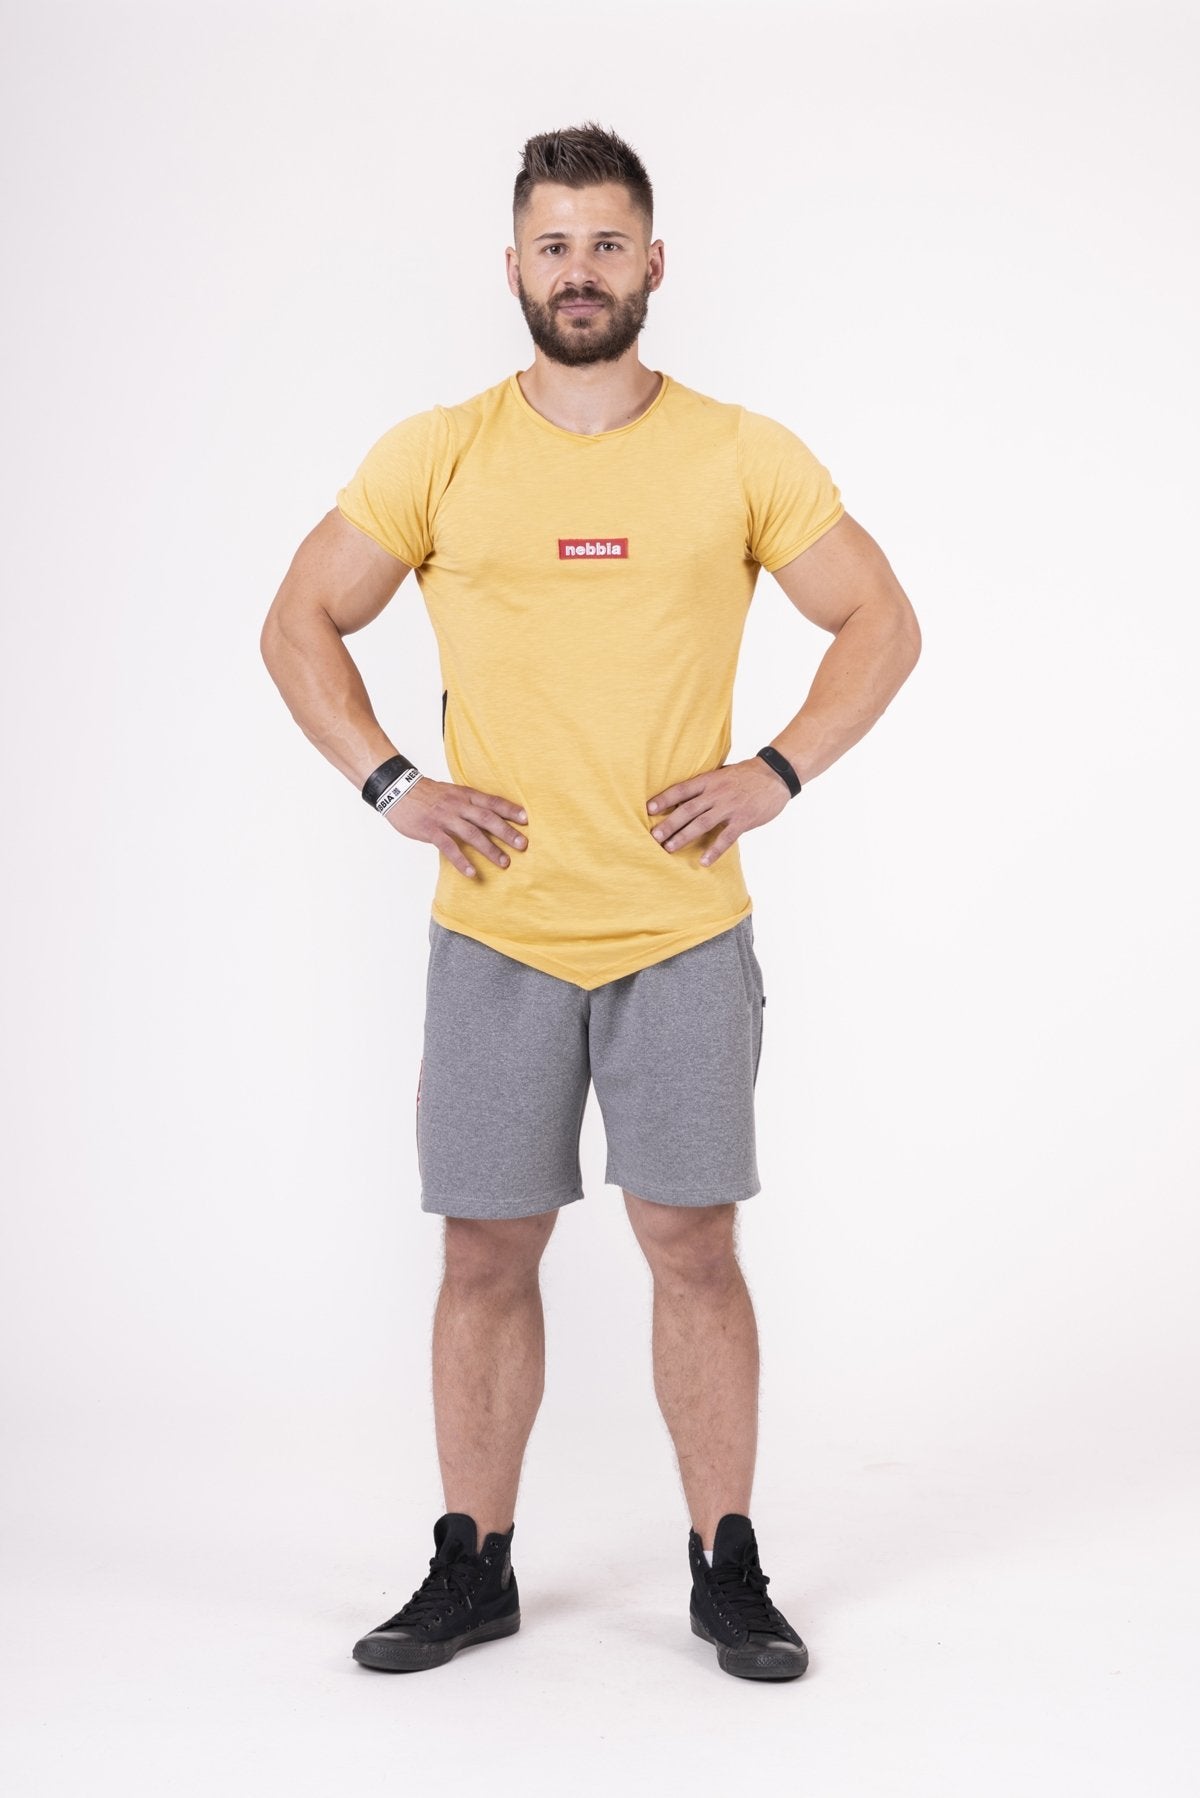 Nebbia Red Label V-Typical T-Shirt 142 - Mustard - Urban Gym Wear